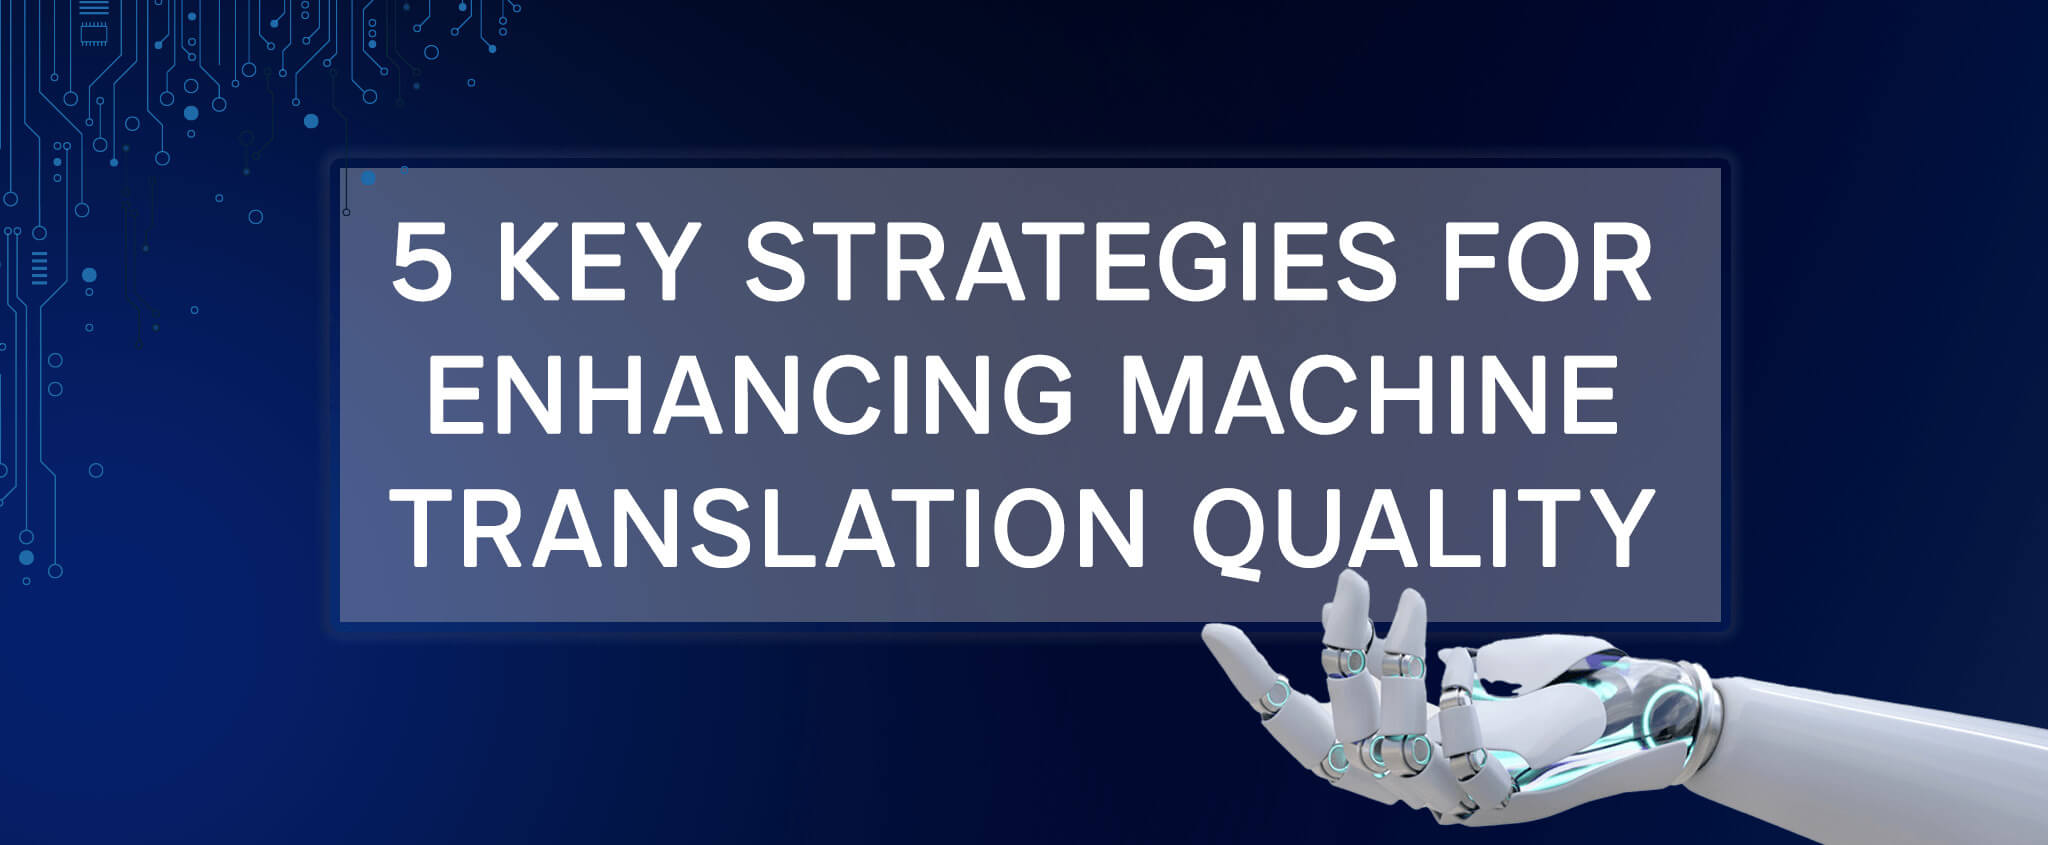 5 Key Strategies for Enhancing Machine Translation Quality